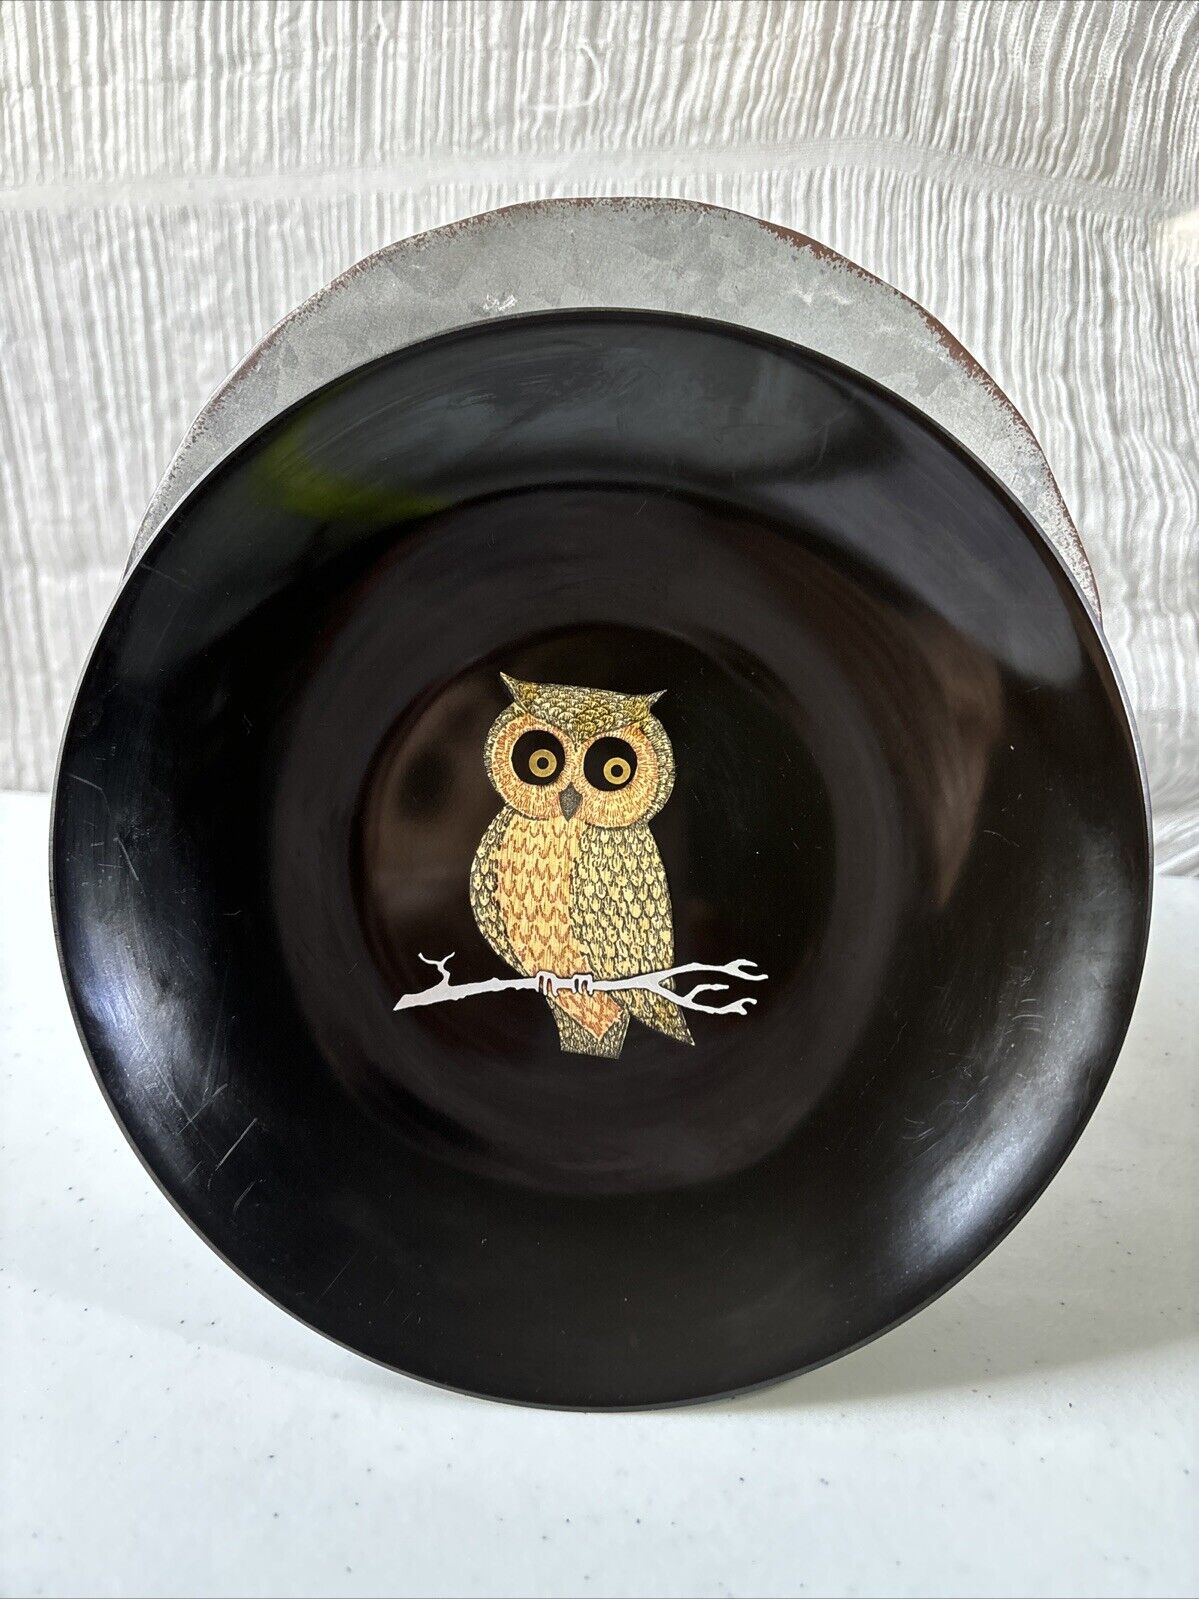 MCM Couroc Bowl Black Phenolic Resin With Inlaid Owl Monterey CA 7.5 Dia